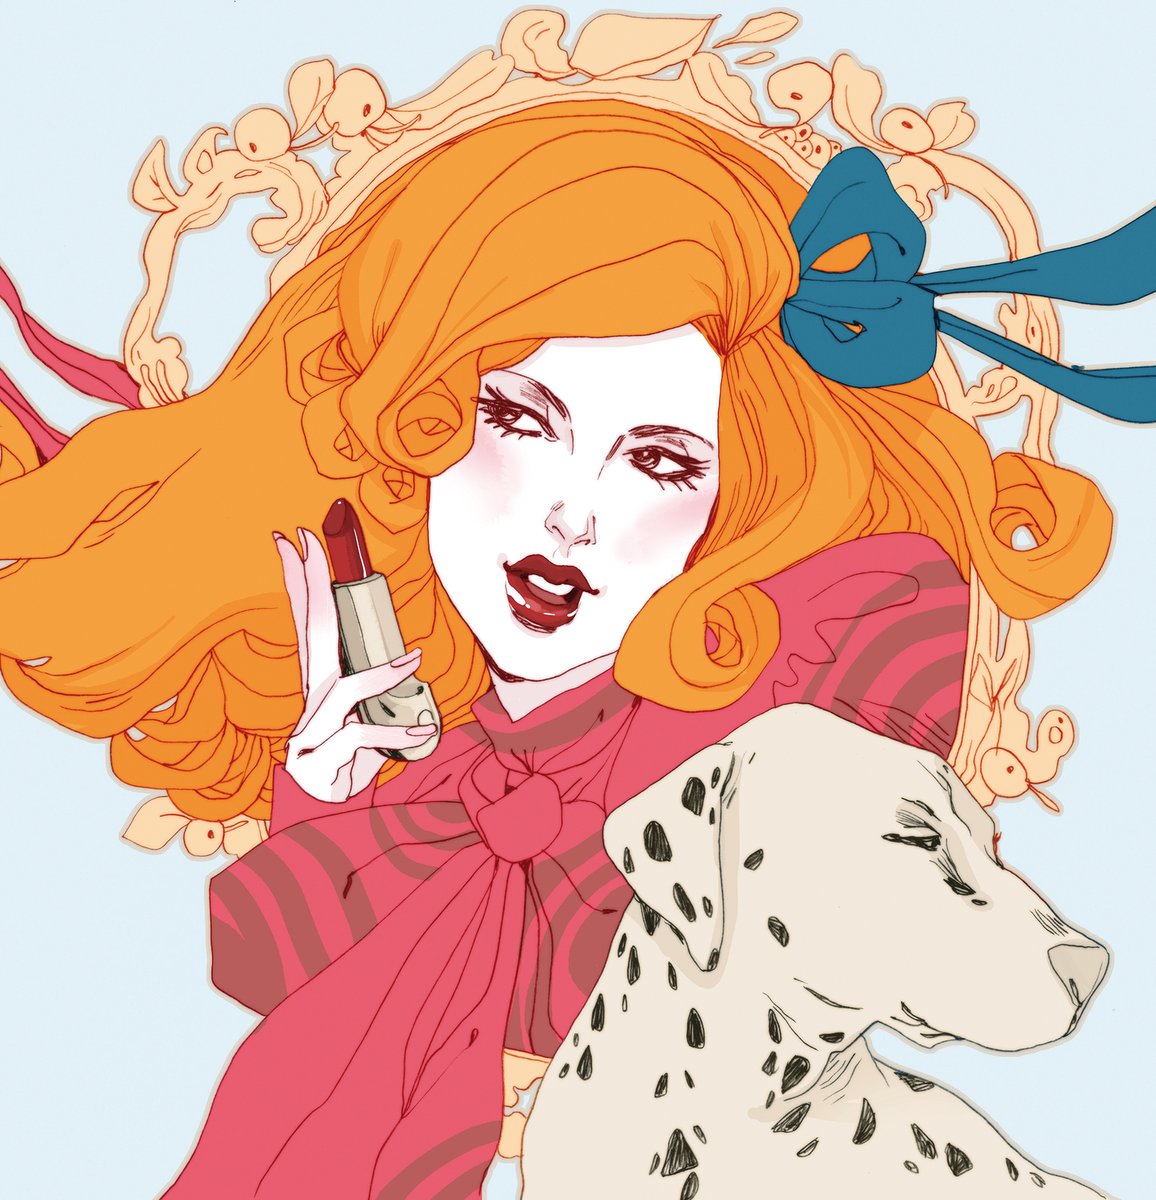 #personalwork #illustration #lipstick #dalmatian #redhead #femalefigure #margueritesauvage